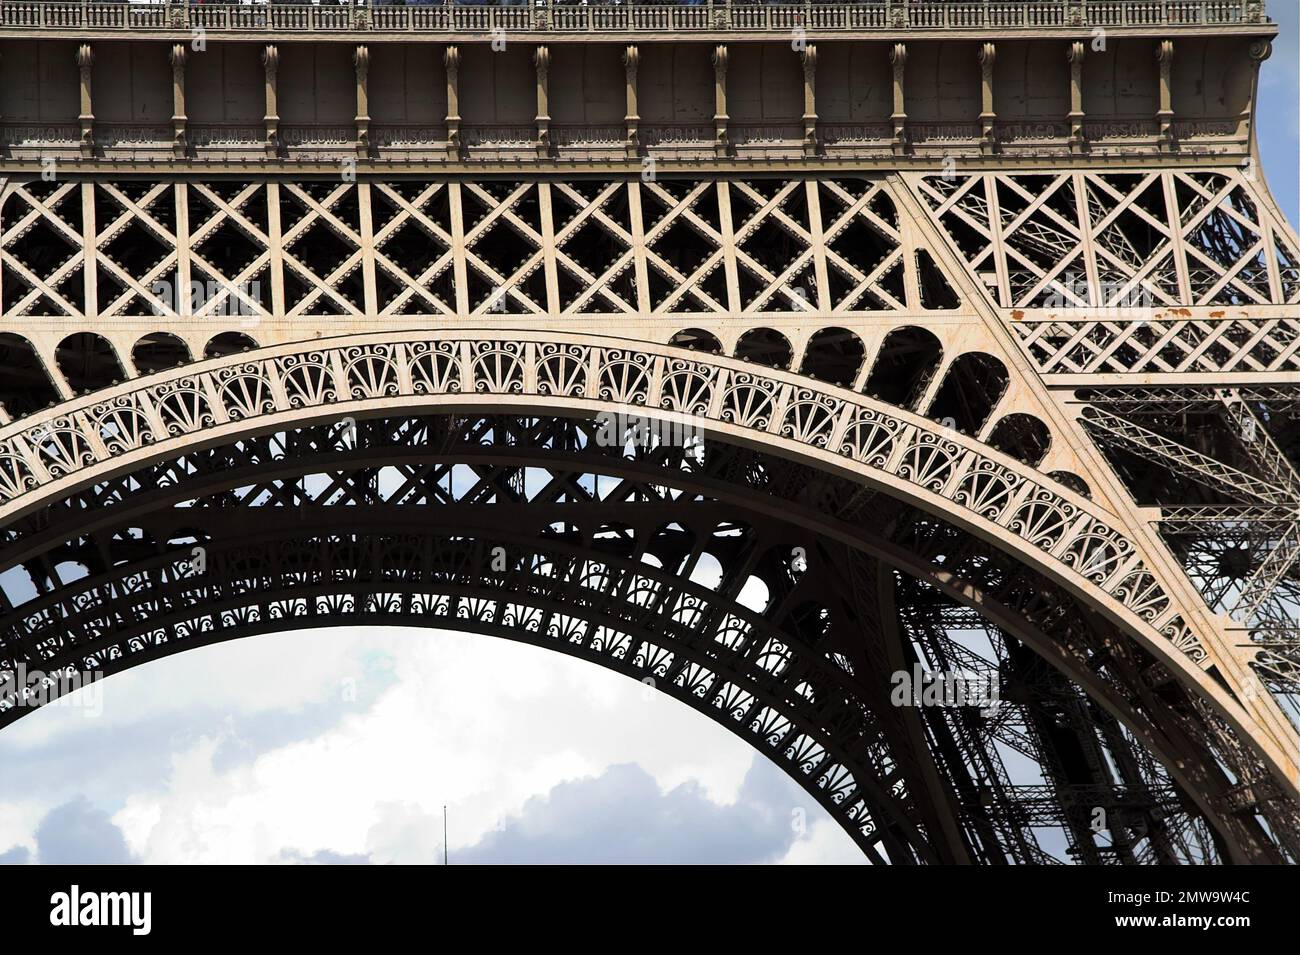 Paryż Paris Francja France Frankreich, Eiffel Tower - fragment of the base - lower part; Eiffelturm - Fragment der Basis - unterer Teil; Wieża Eiffla Stock Photo